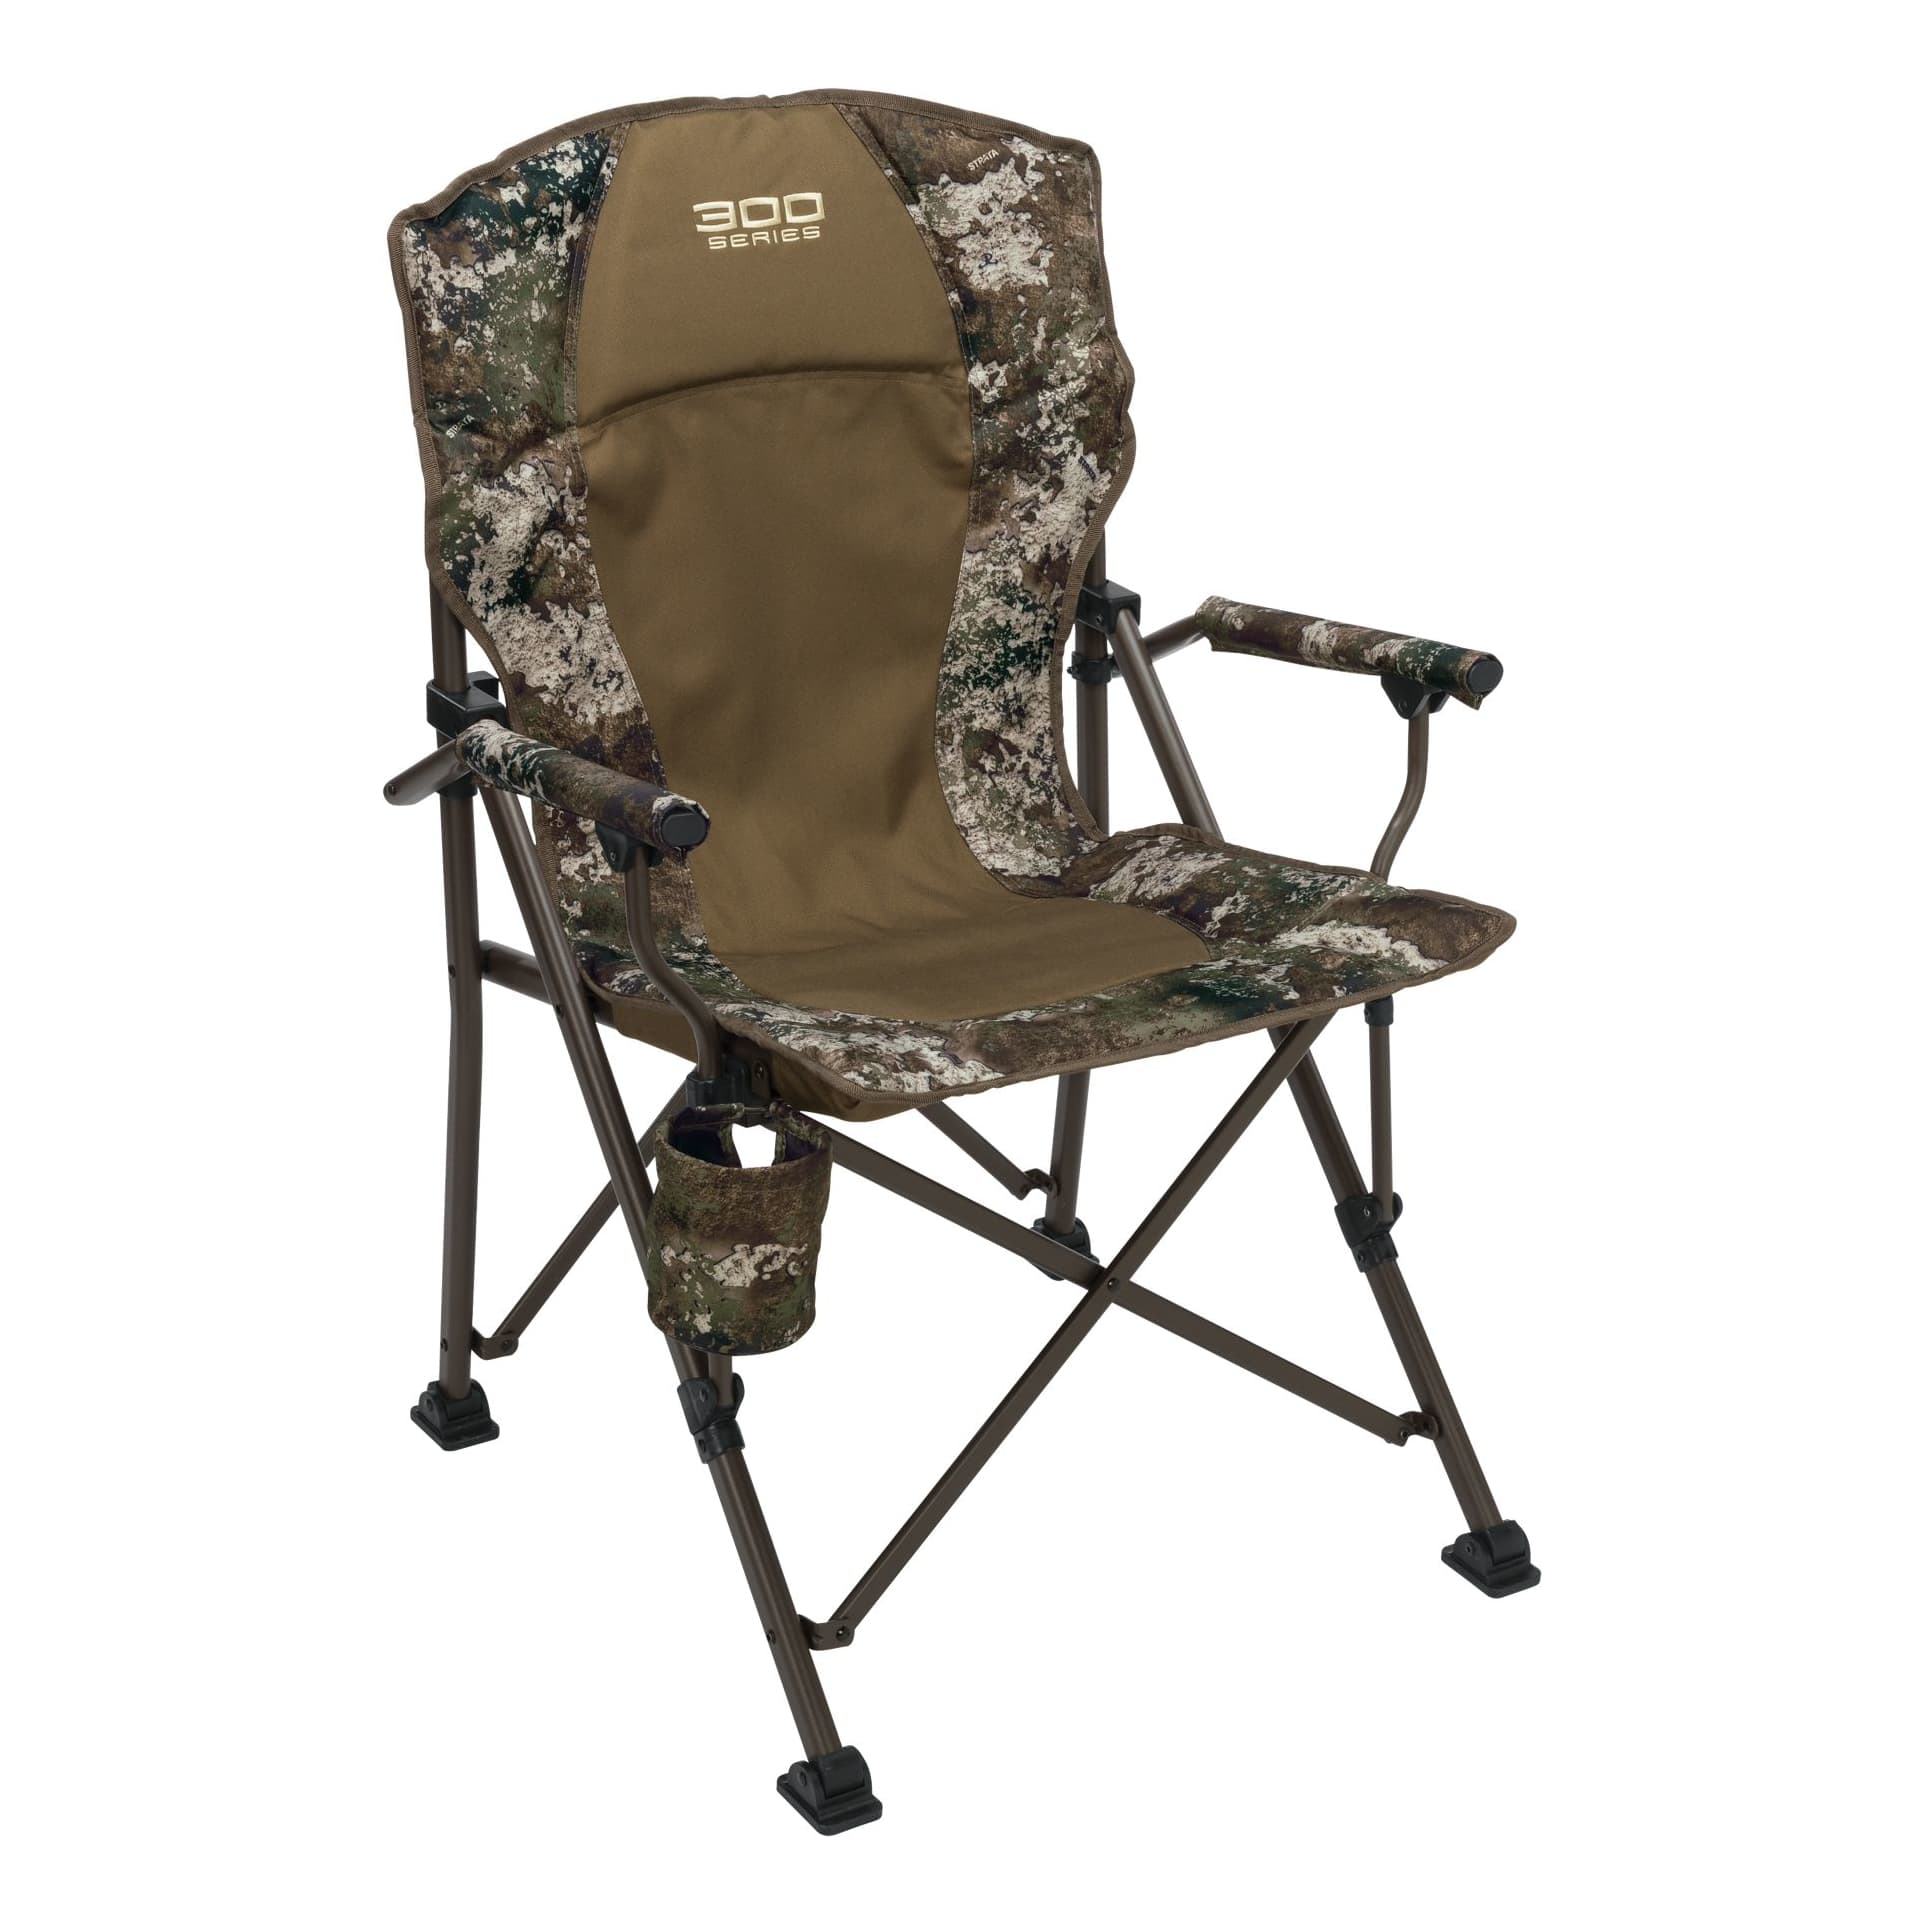 Cabela's 300 Series TrueTimber Strata Folding Hunting Chair